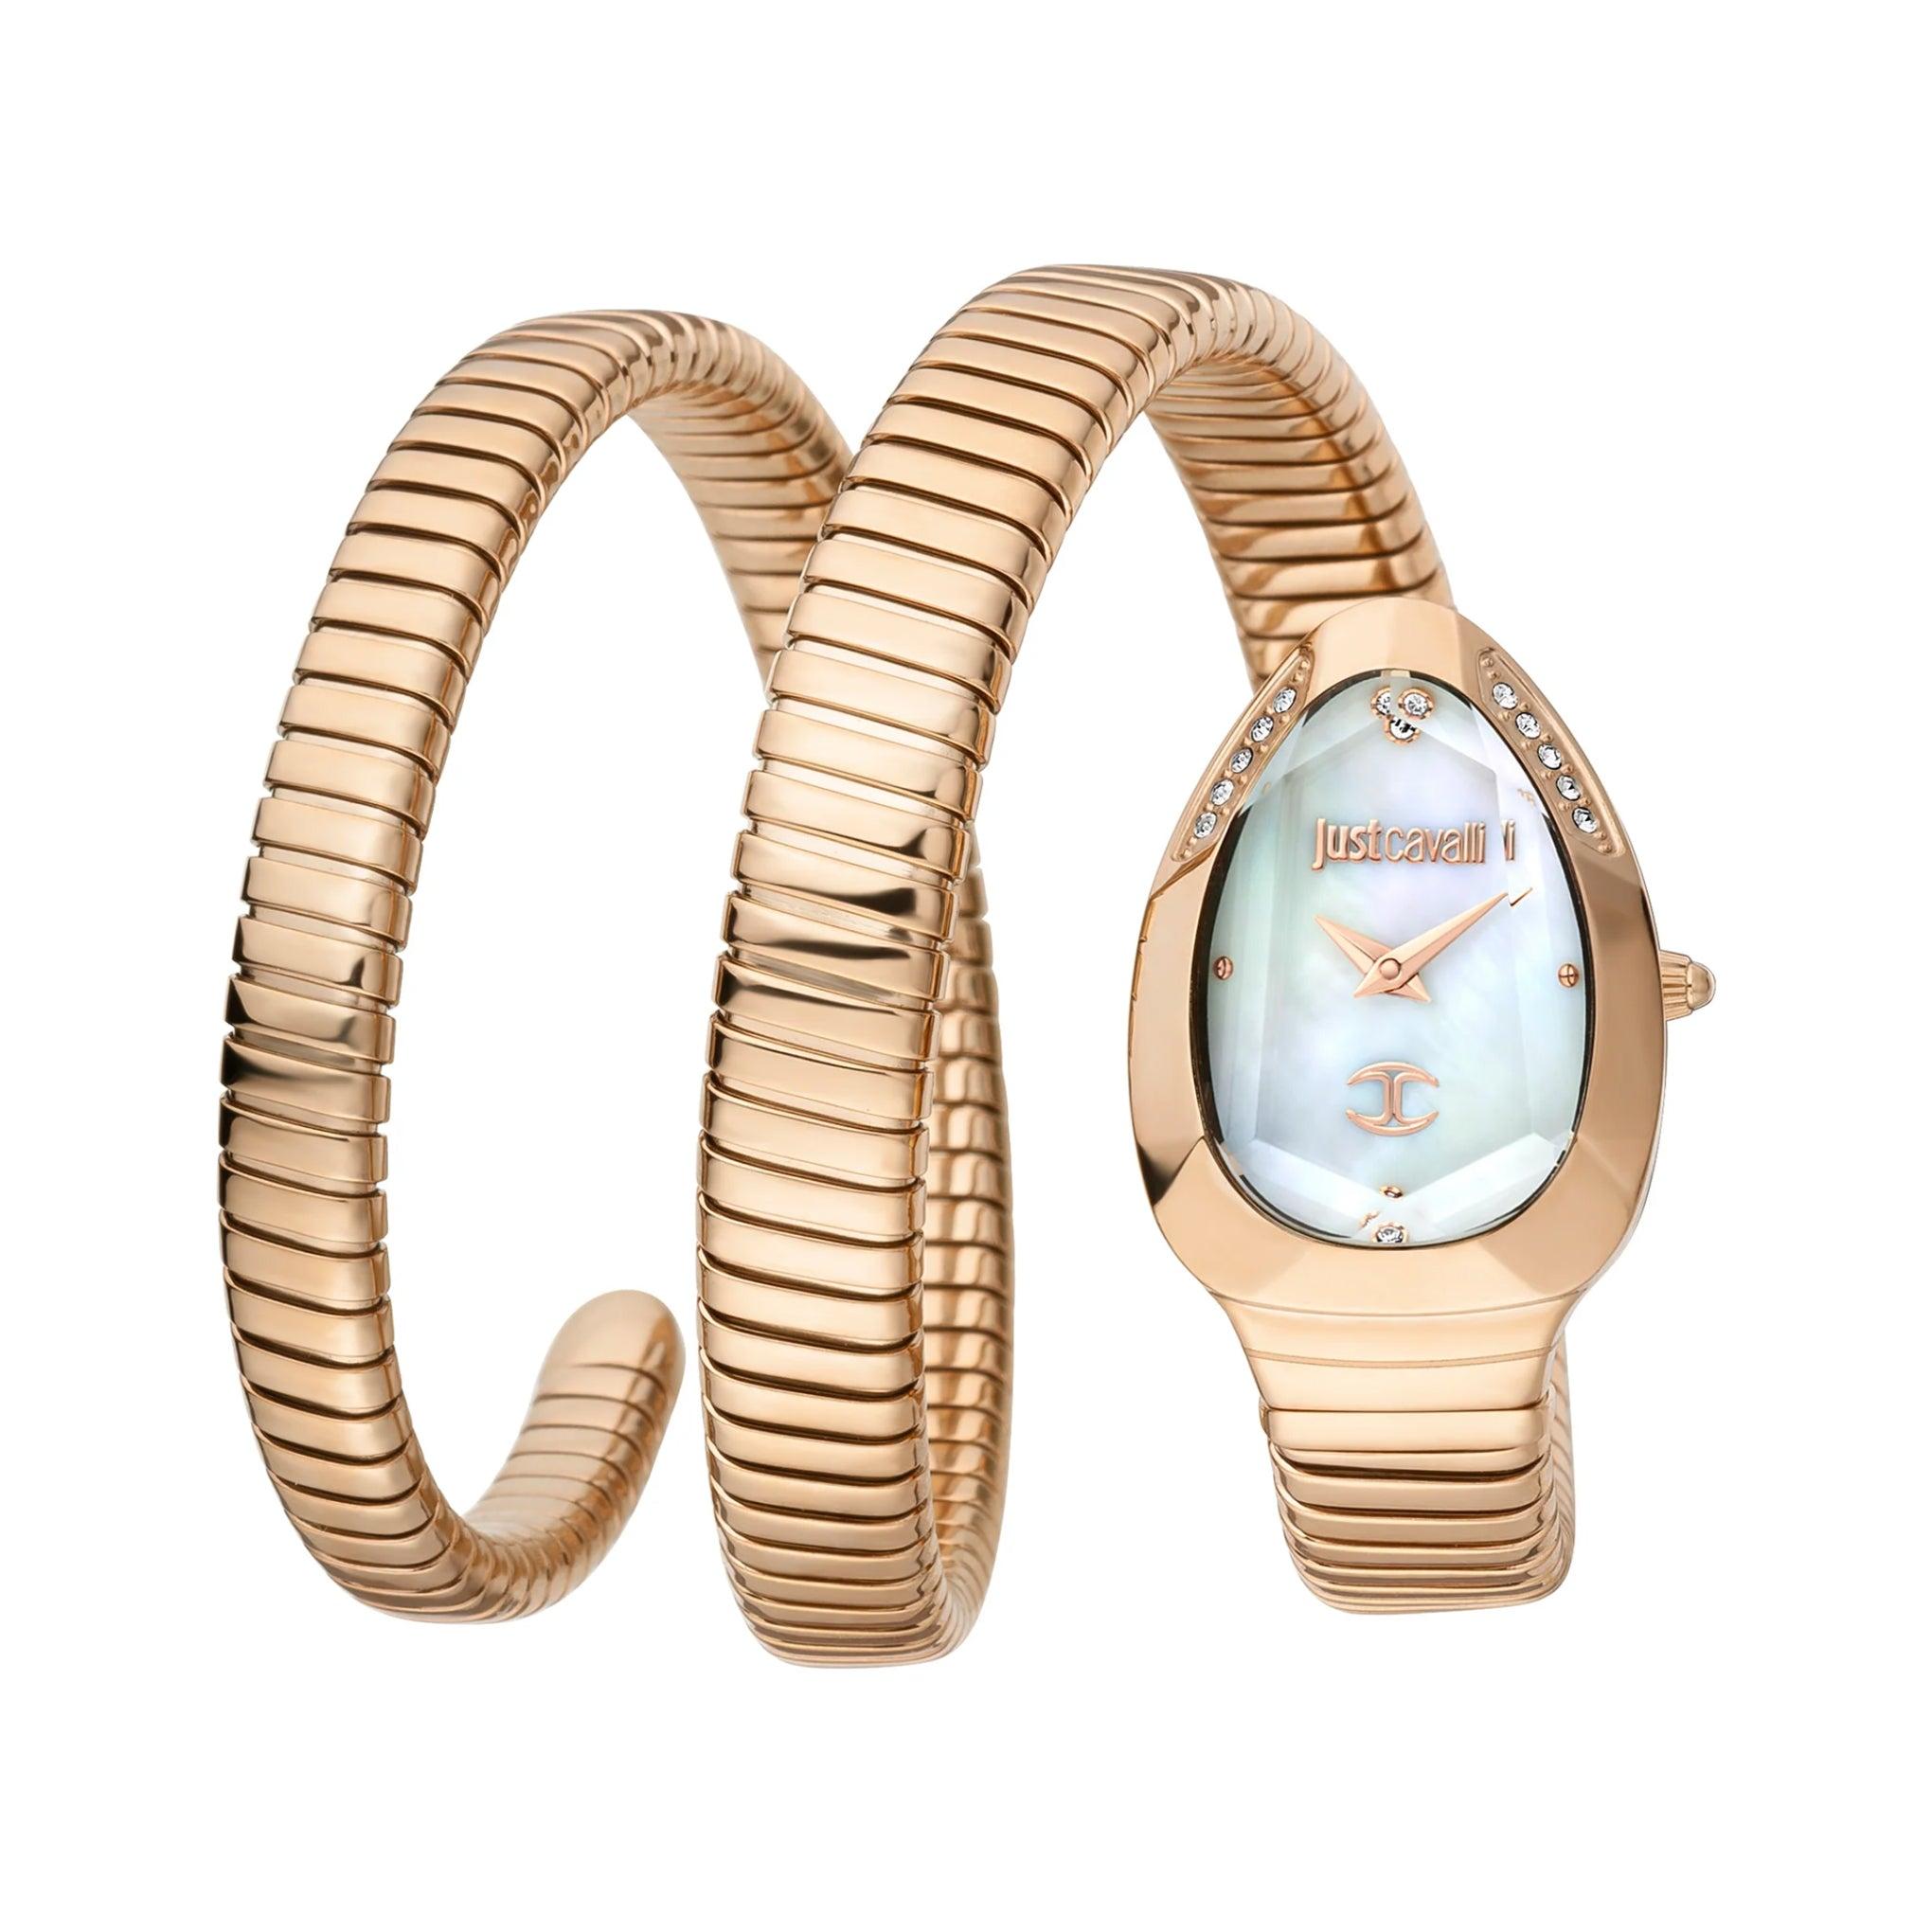 ساعة يد نسائية بشكل ثعبان- ذهبي - بحزام معدني مقاوم للصدأ جست كافالي Just Cavalli Women's Signature Snake Stainless Steel Quartz Watch